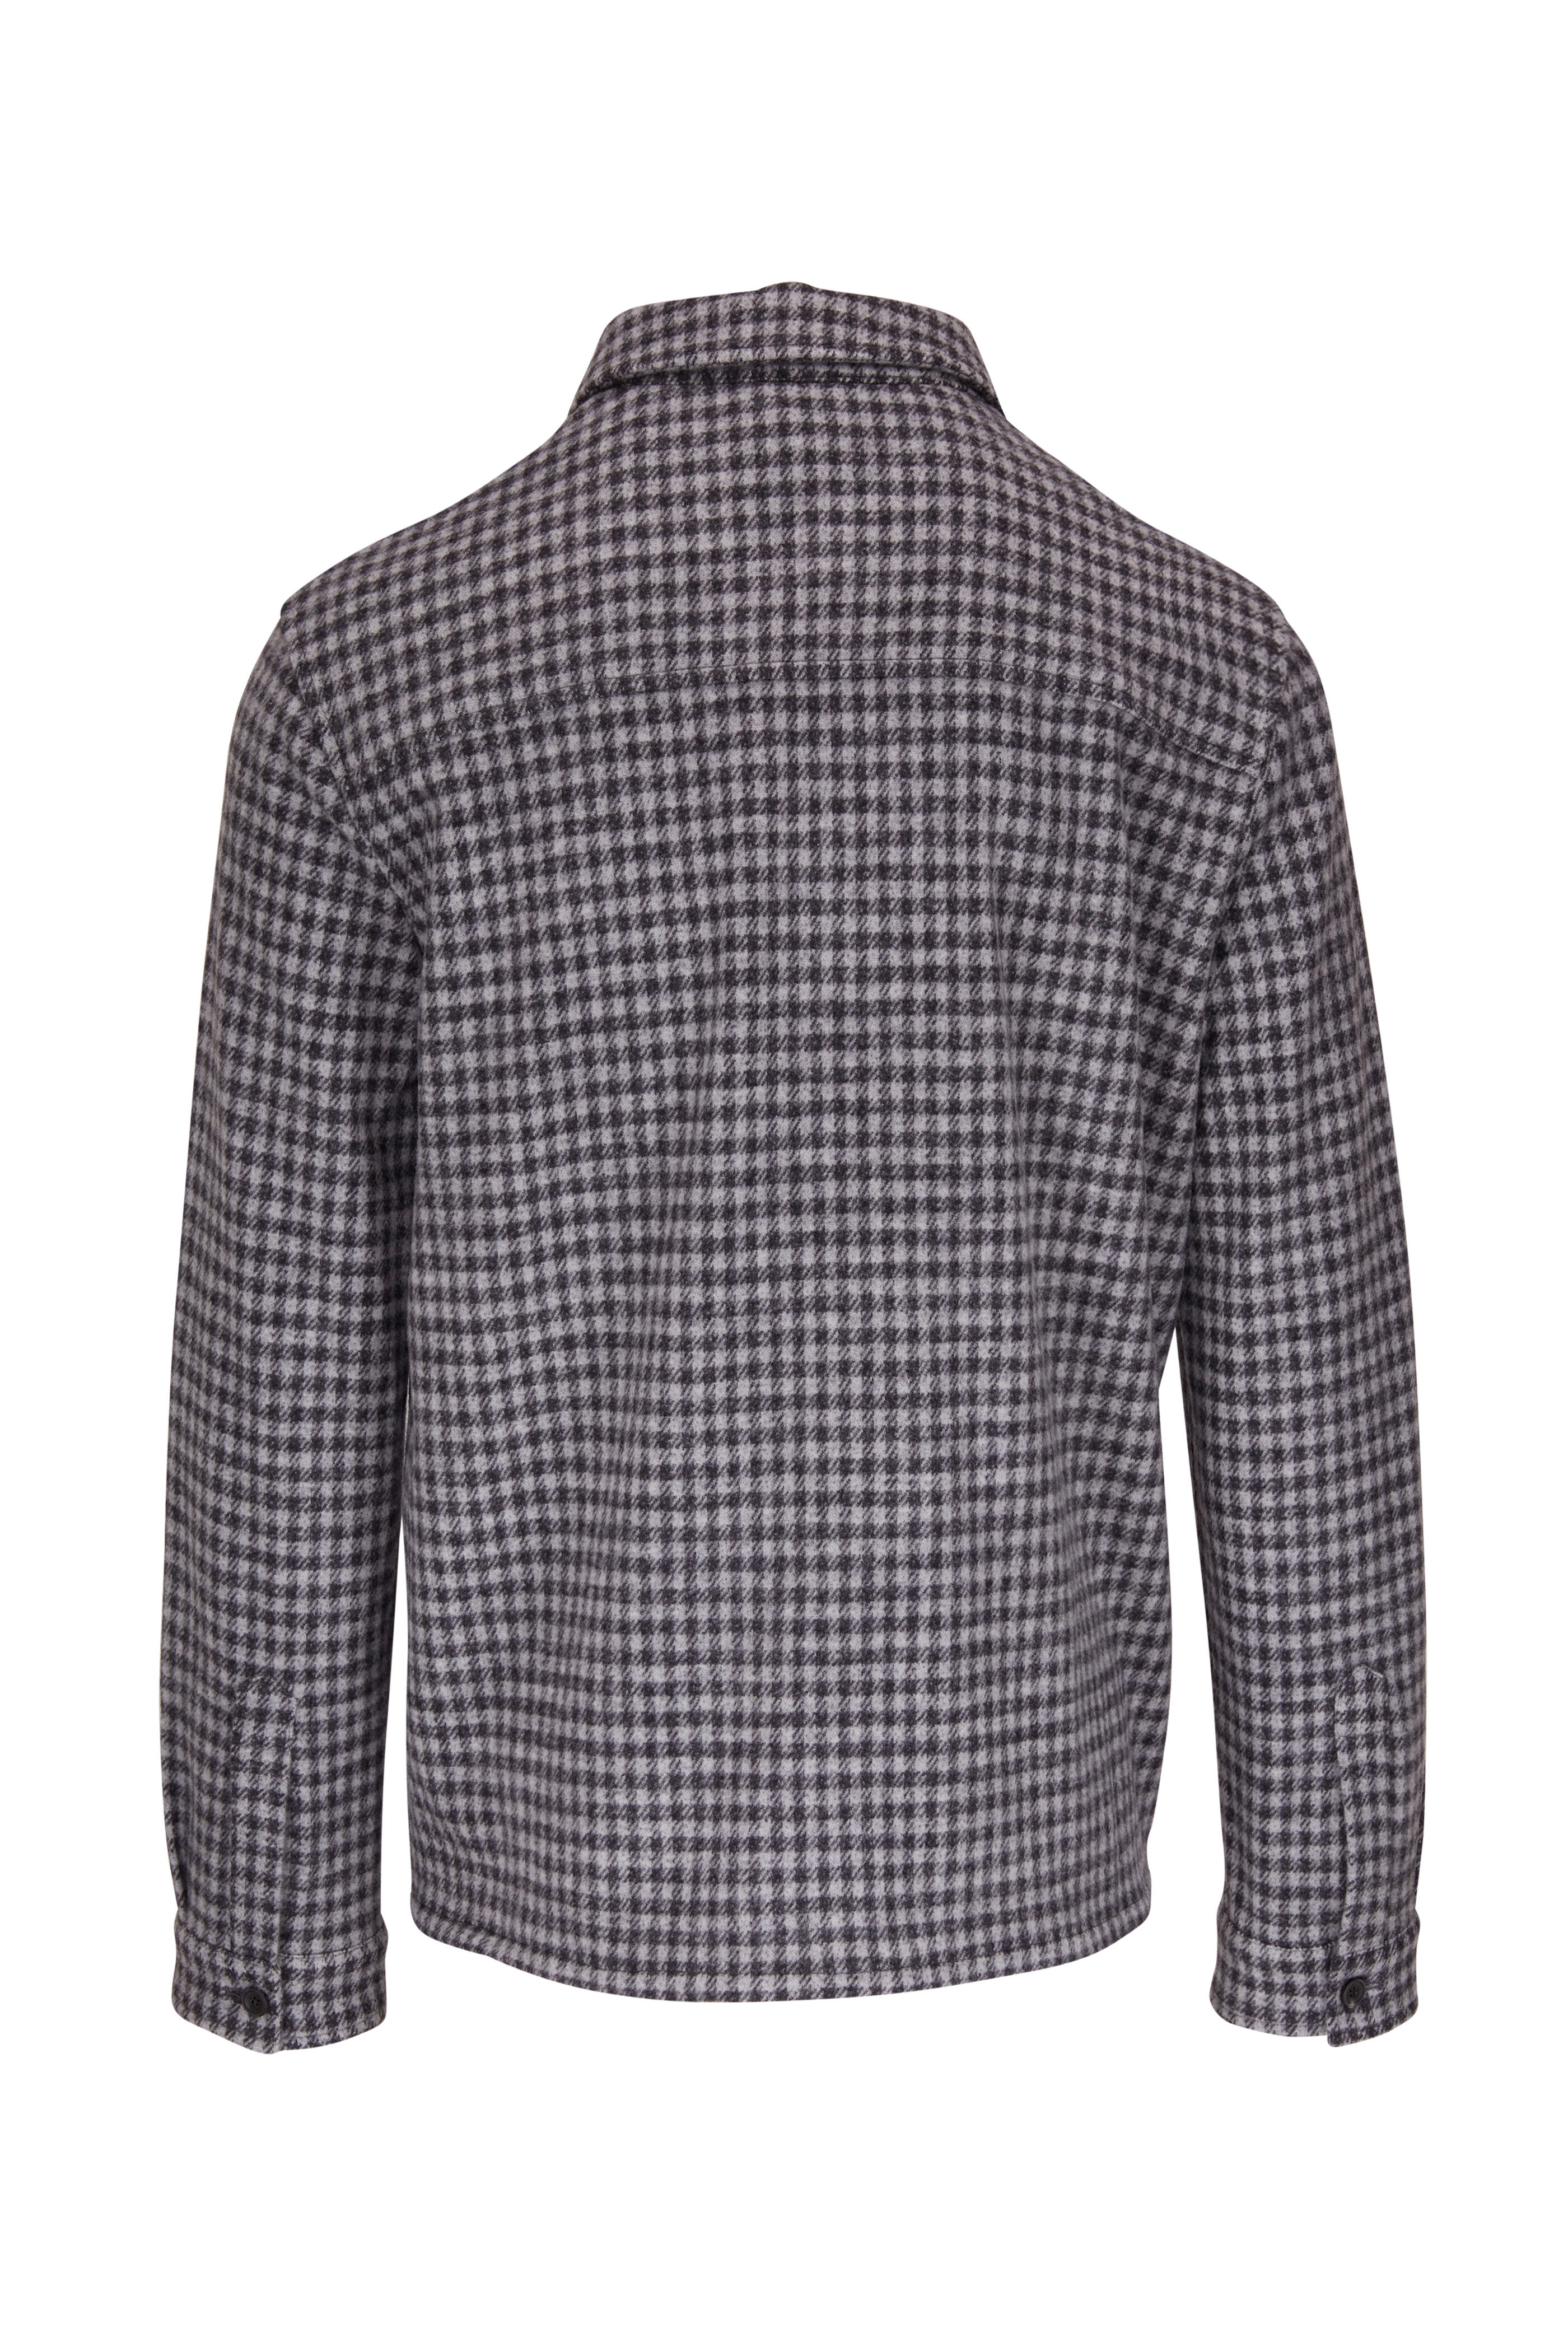 Marco Pescarolo - Gray & Ivory Check Full Zip Sweater